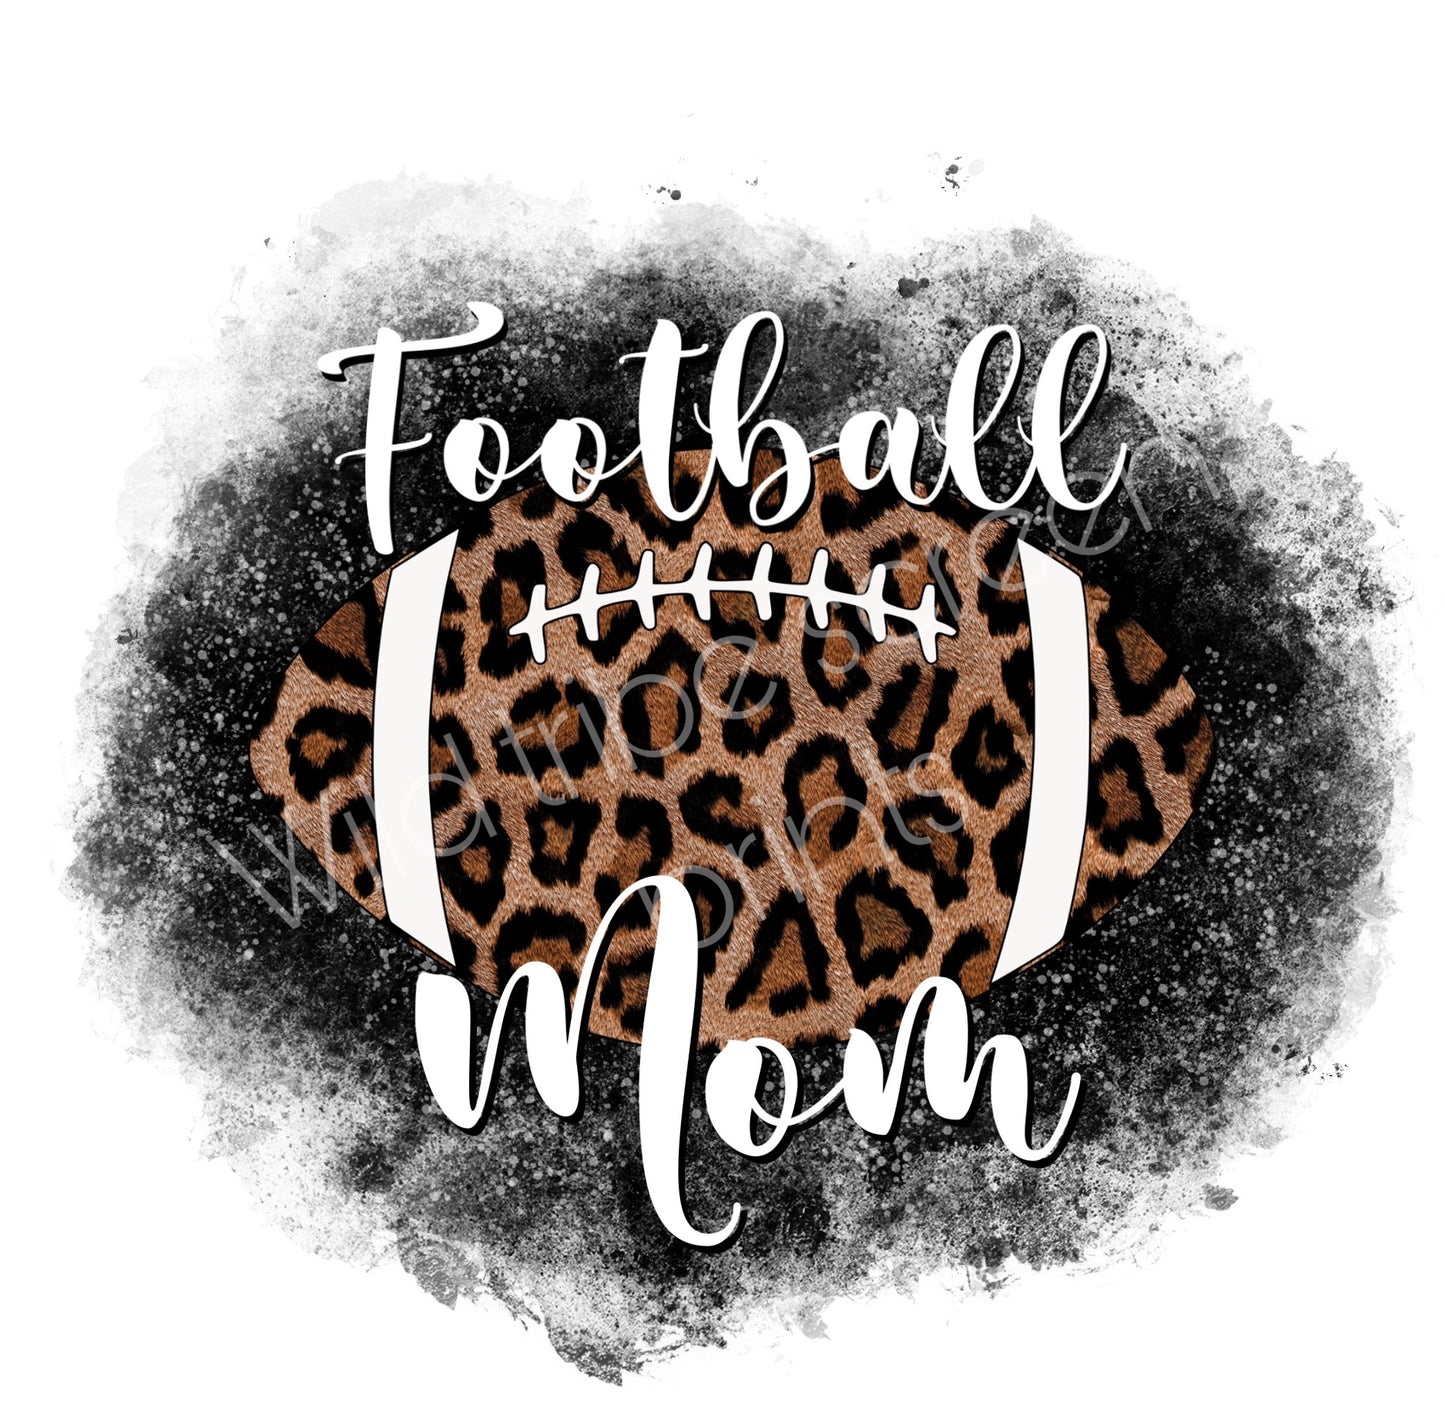 Football mom